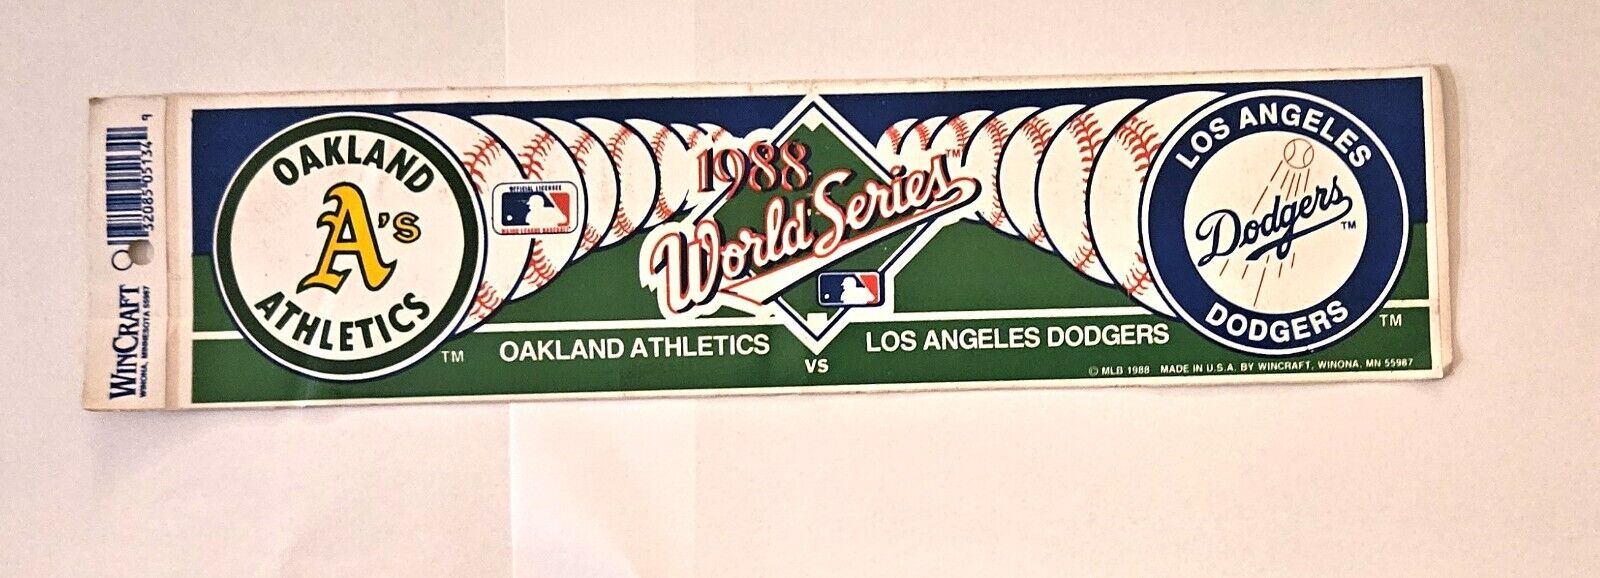 1988 World Series Bumper sticker (unused)Los Angeles Dodgers vs. Oakland A\'s